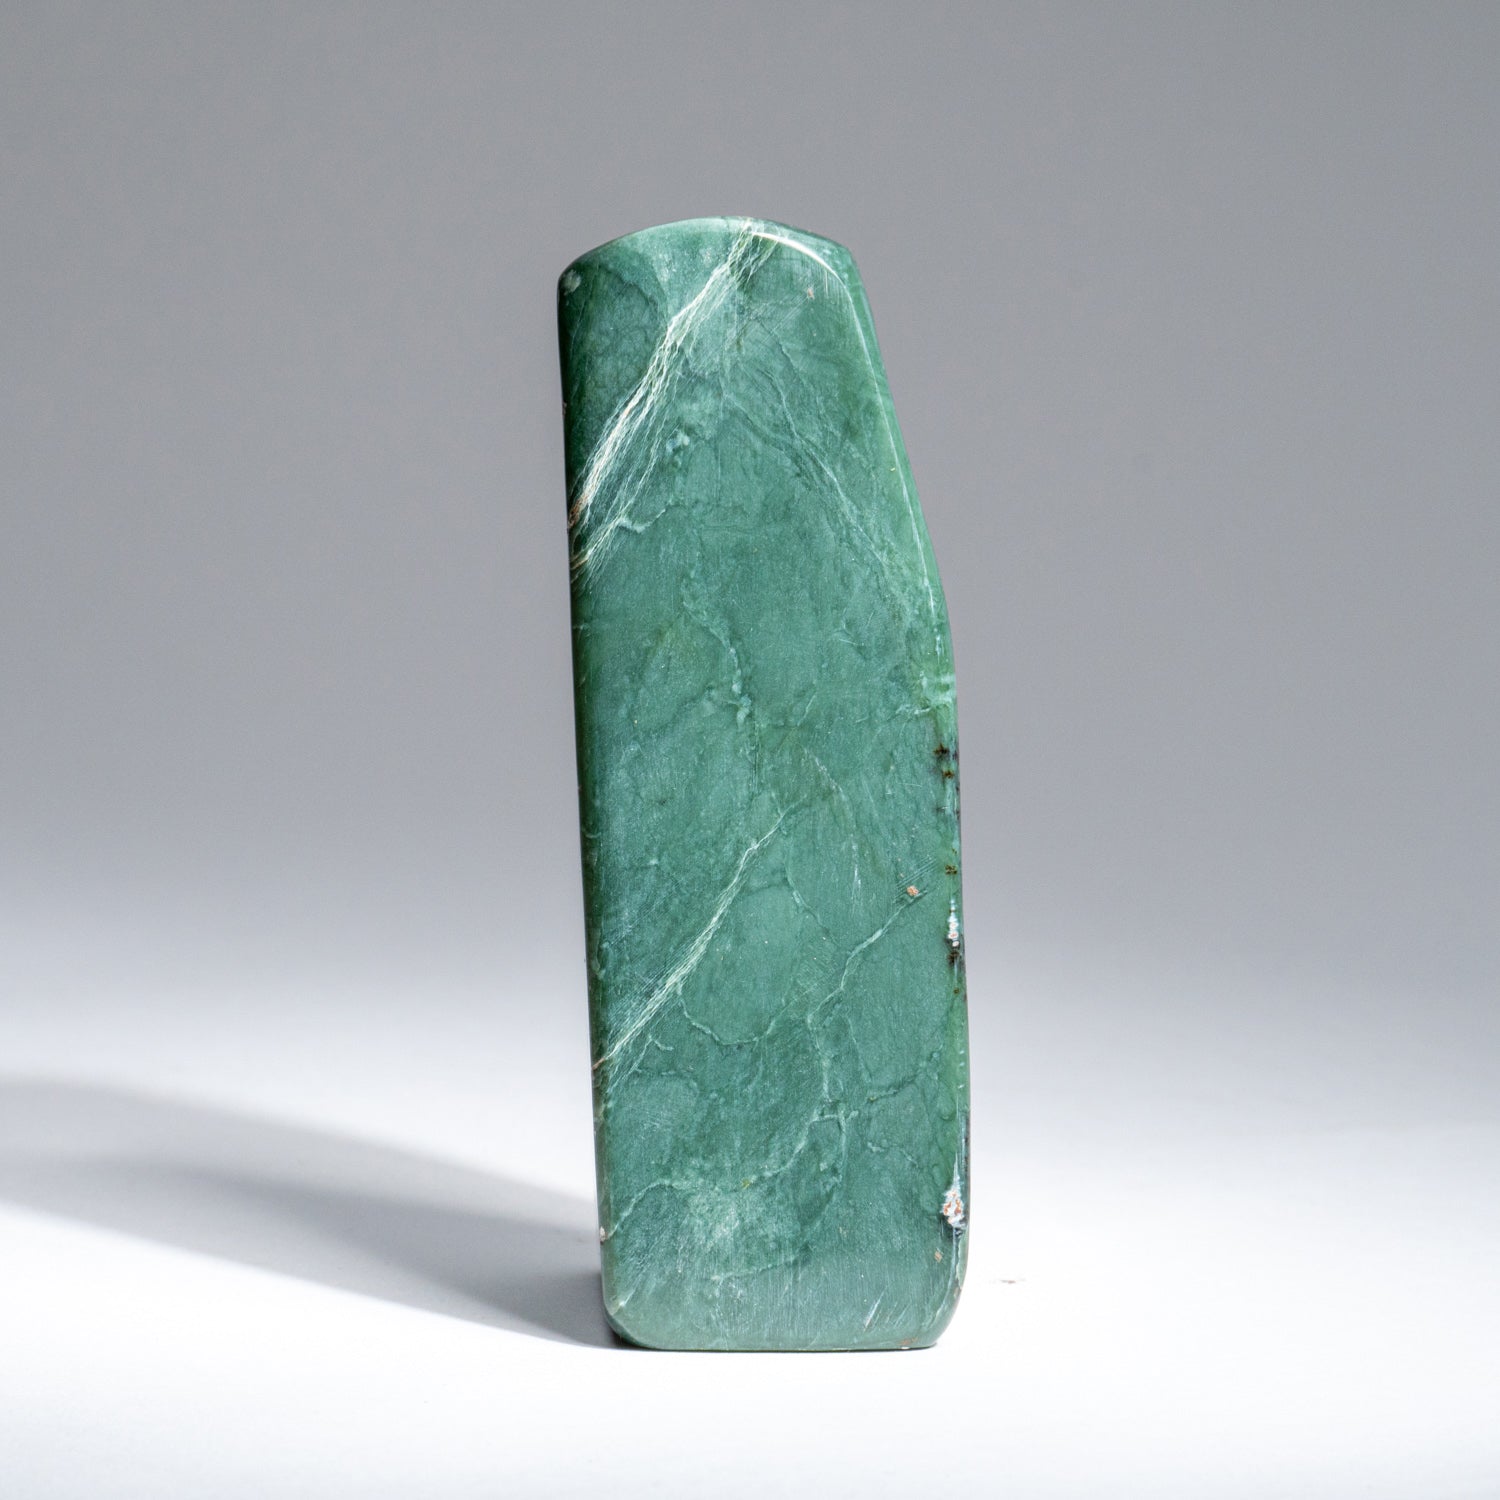 Polished Nephrite Jade Freeform from Pakistan (243.7 grams)